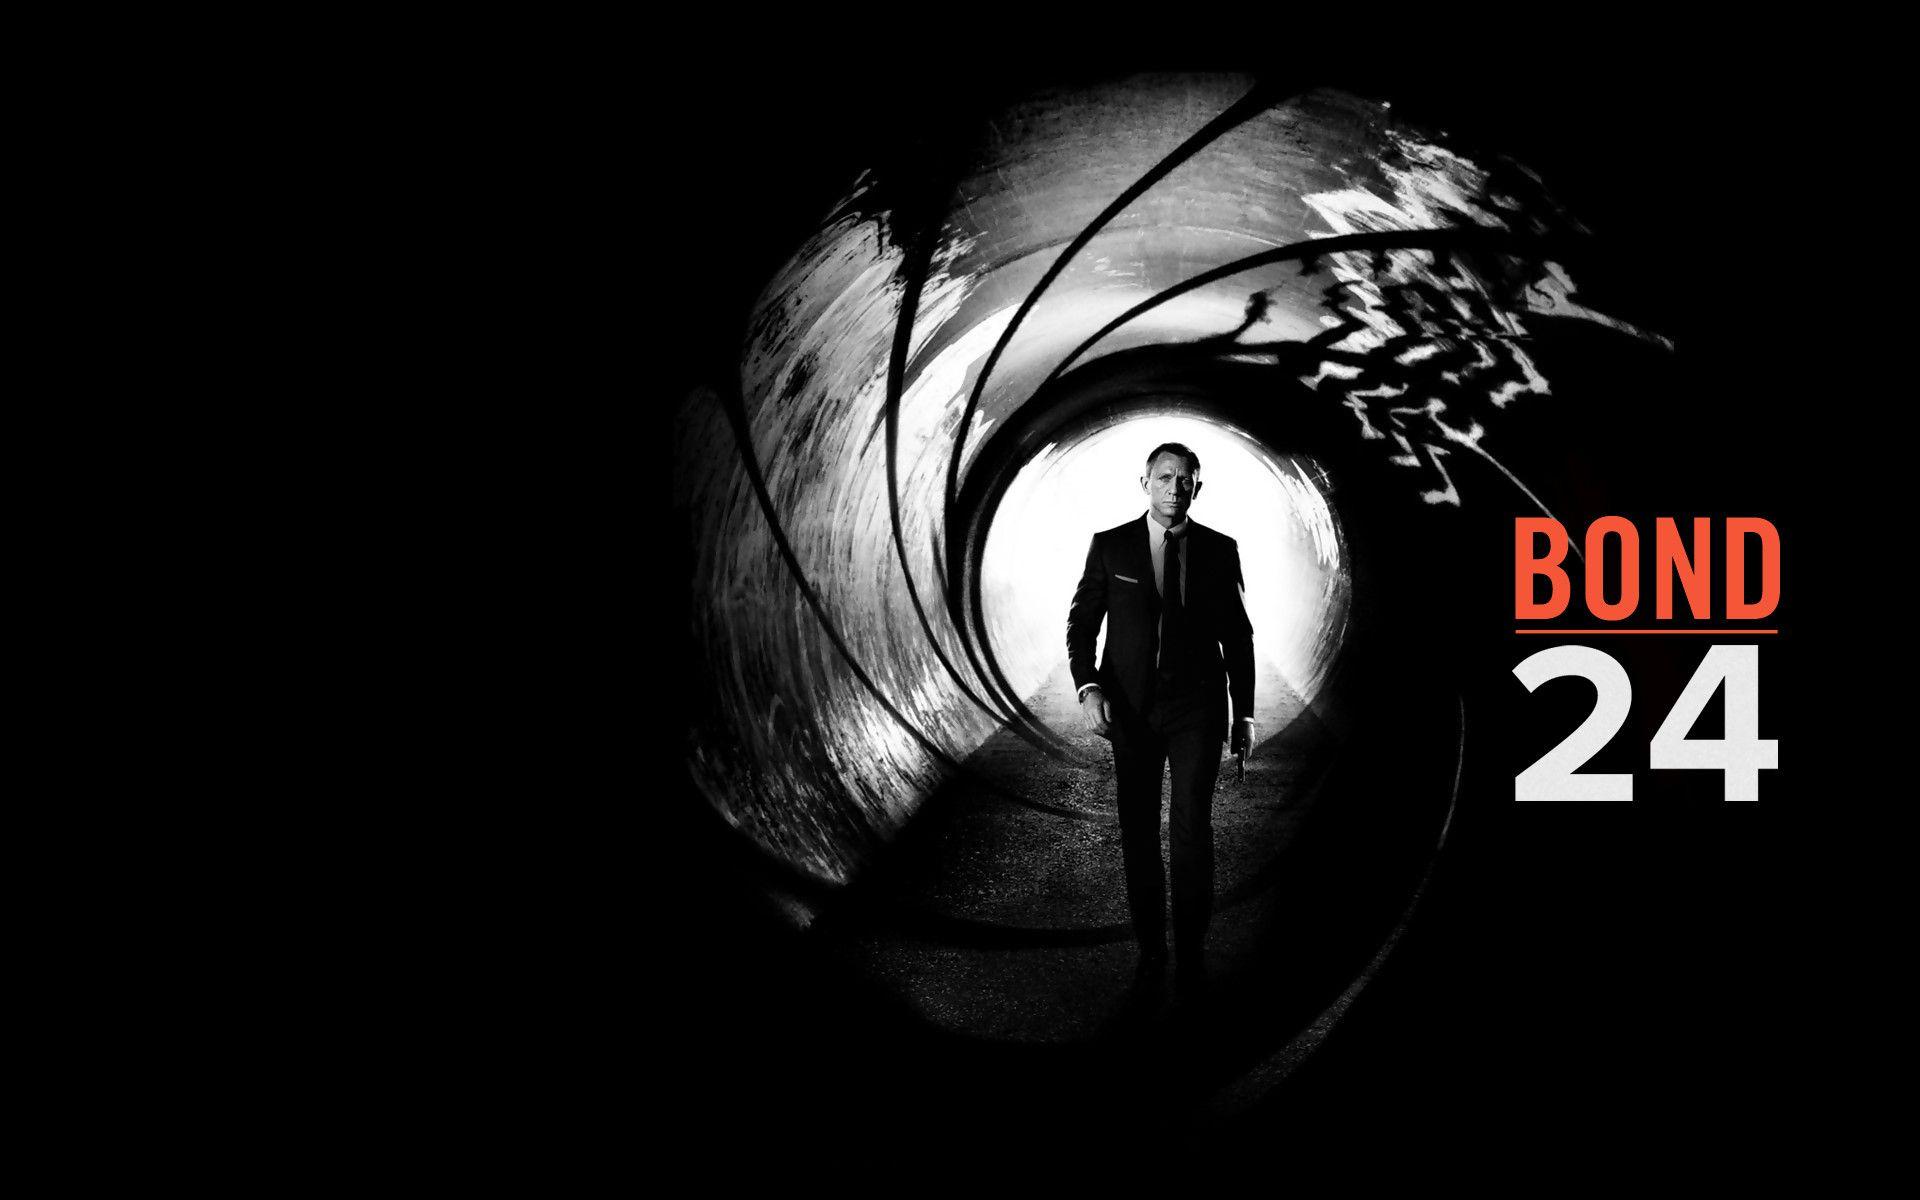 James Bond HD Image Spectre